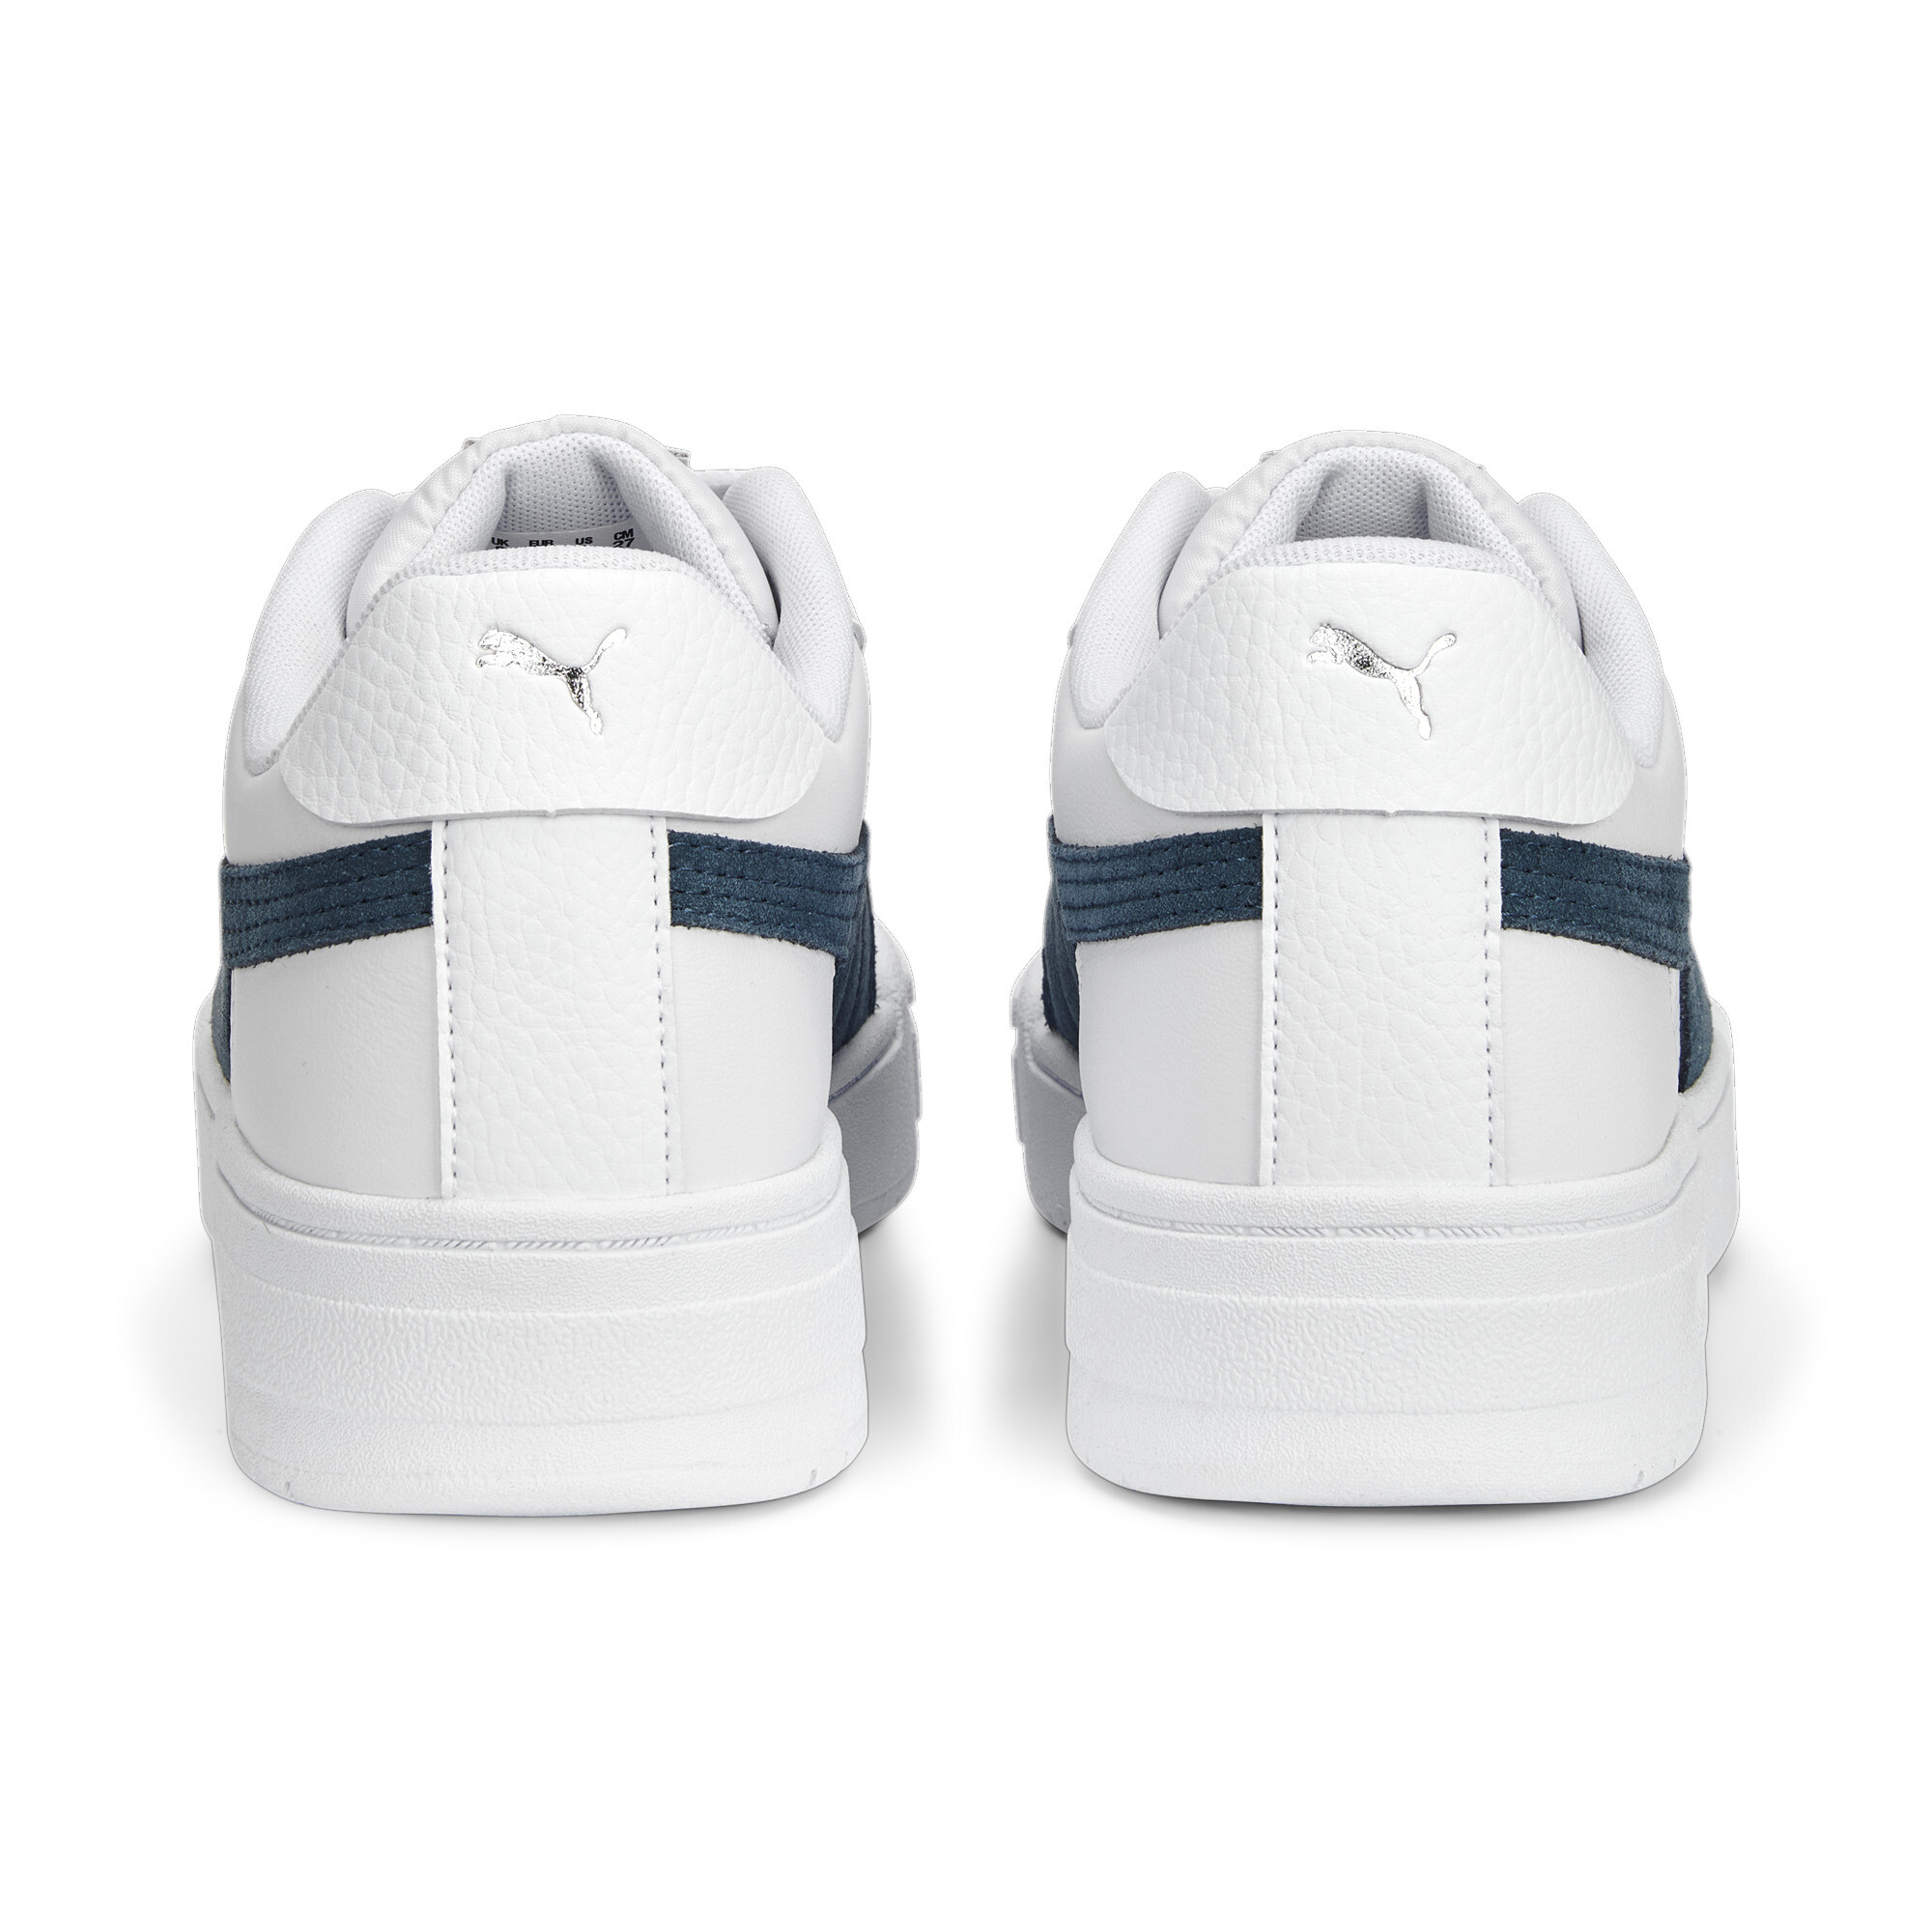 Men's Puma CA Pro Suede FS Sneakers, White, Size 44.5, Shoes